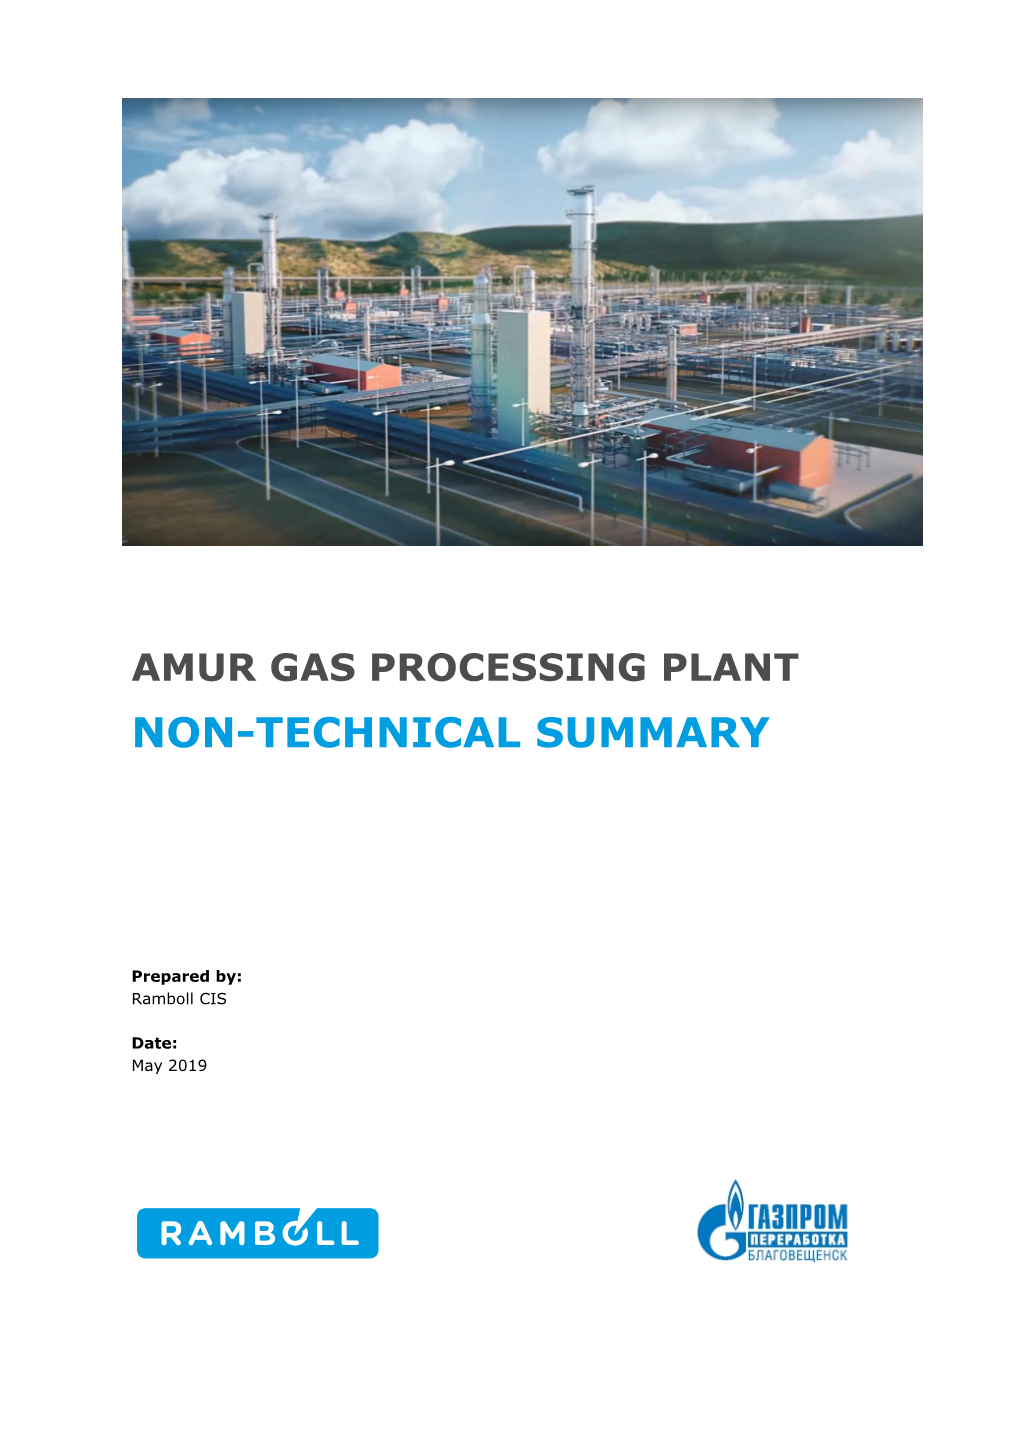 Amur Gas Processing Plant Non-Technical Summary